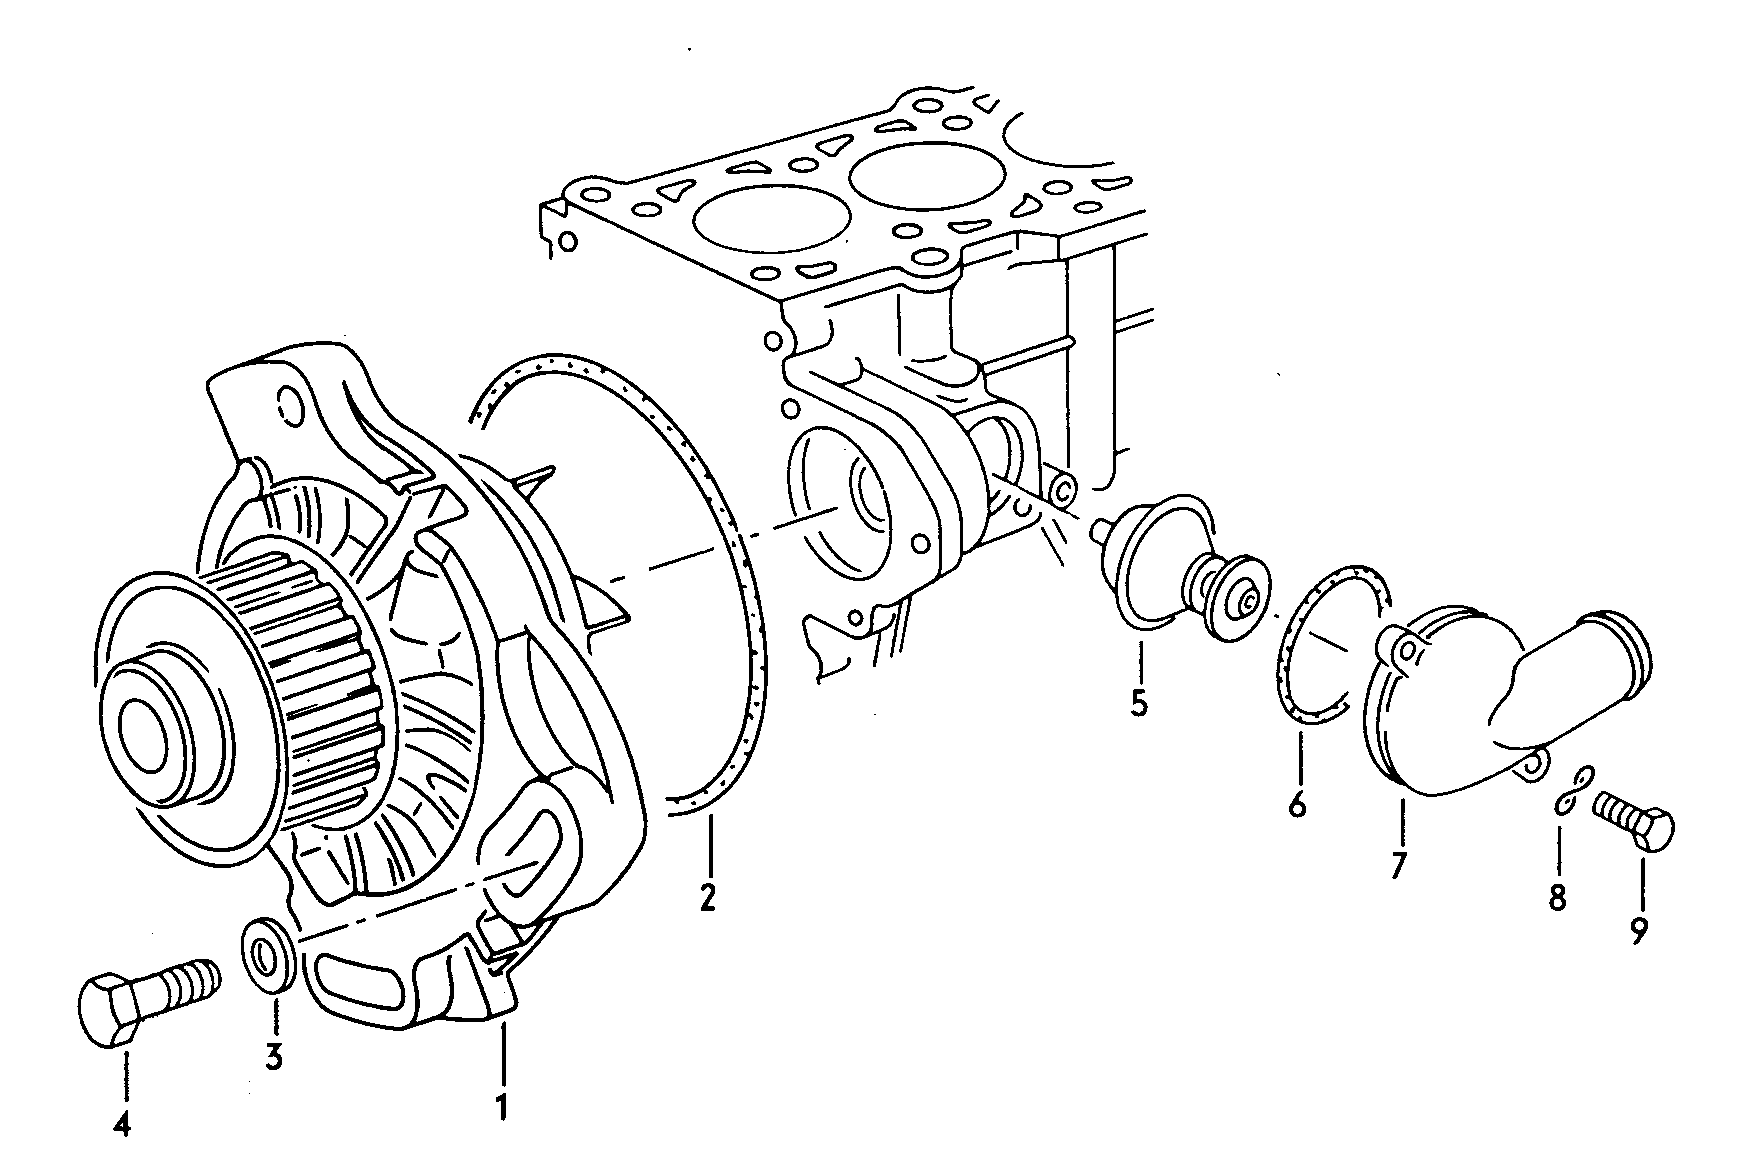 Pompa płynu chłodzącego 2,0-2,5 ltr. - Audi 100/Avant - a100